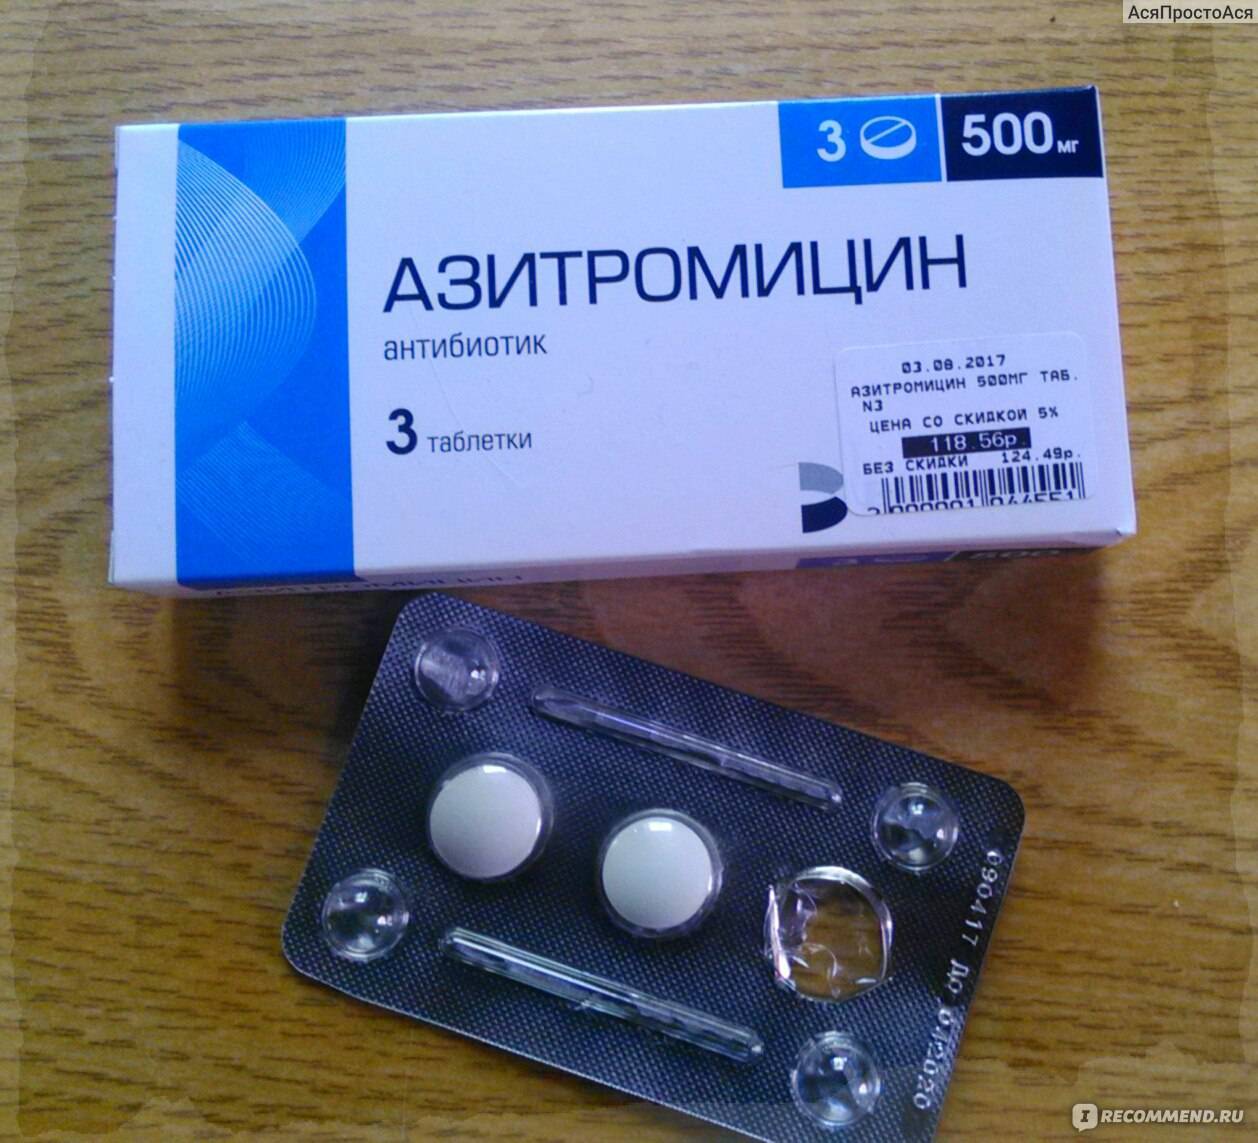 Антибиотик от горла взрослым недорогой. Антибиотик три таблетки Азитромицин. Таблетки 3 шт антибиотики Азитромицин. Три таблетки от простуды антибиотик Азитромицин. Антибиотик azithromycin 500.